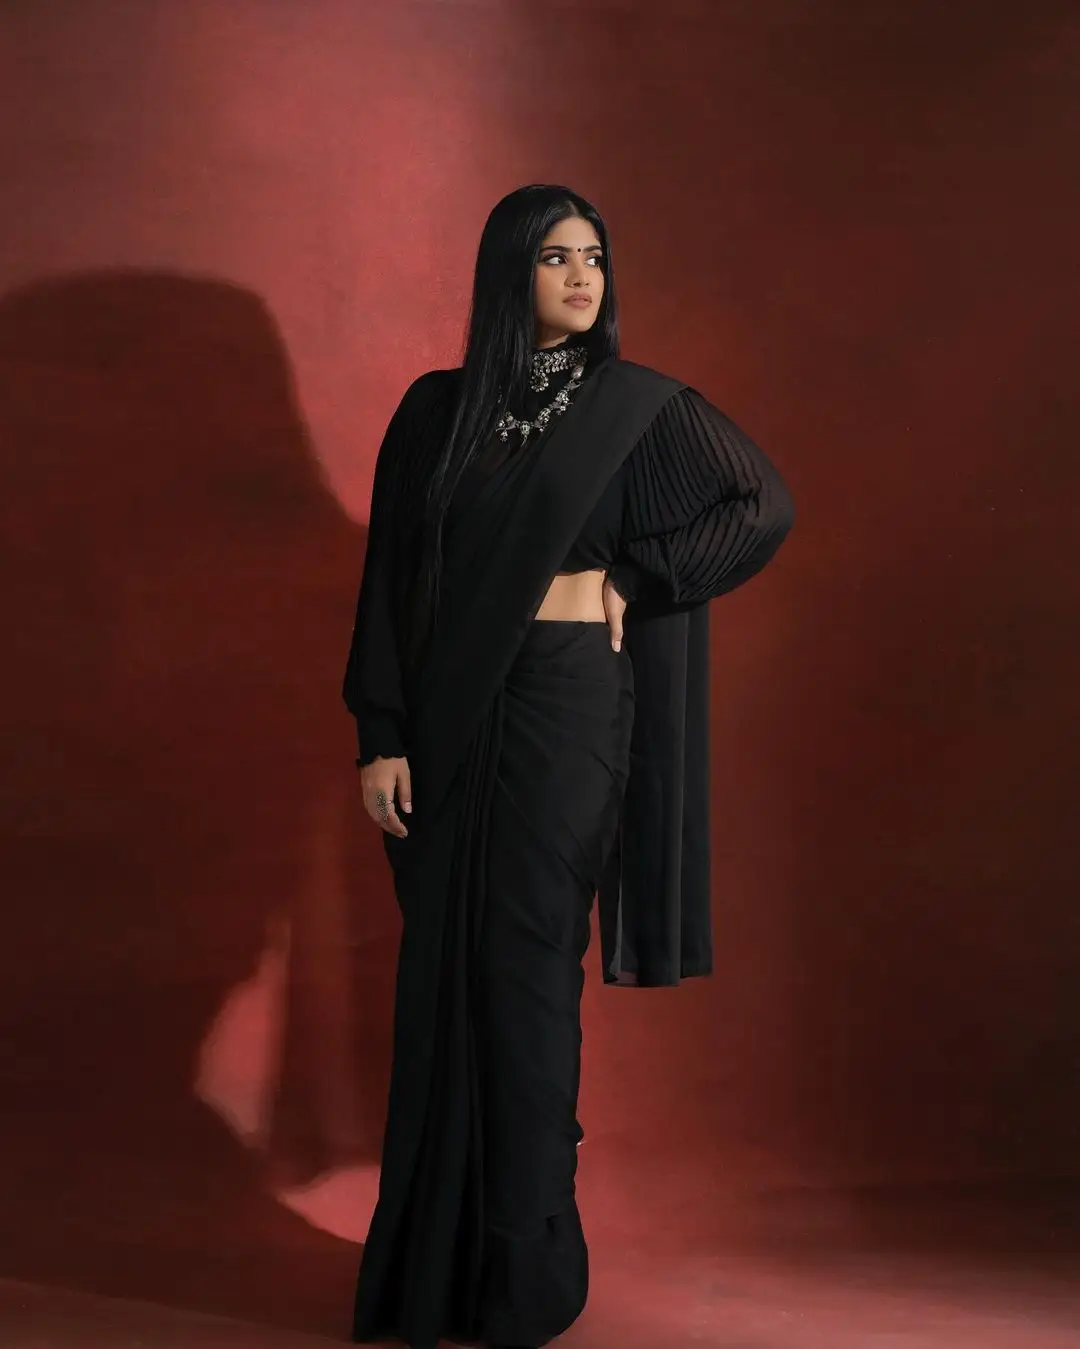 MALAYALAM ACTRESS MEGHA AKASH IN LONG BLACK DRESS 4